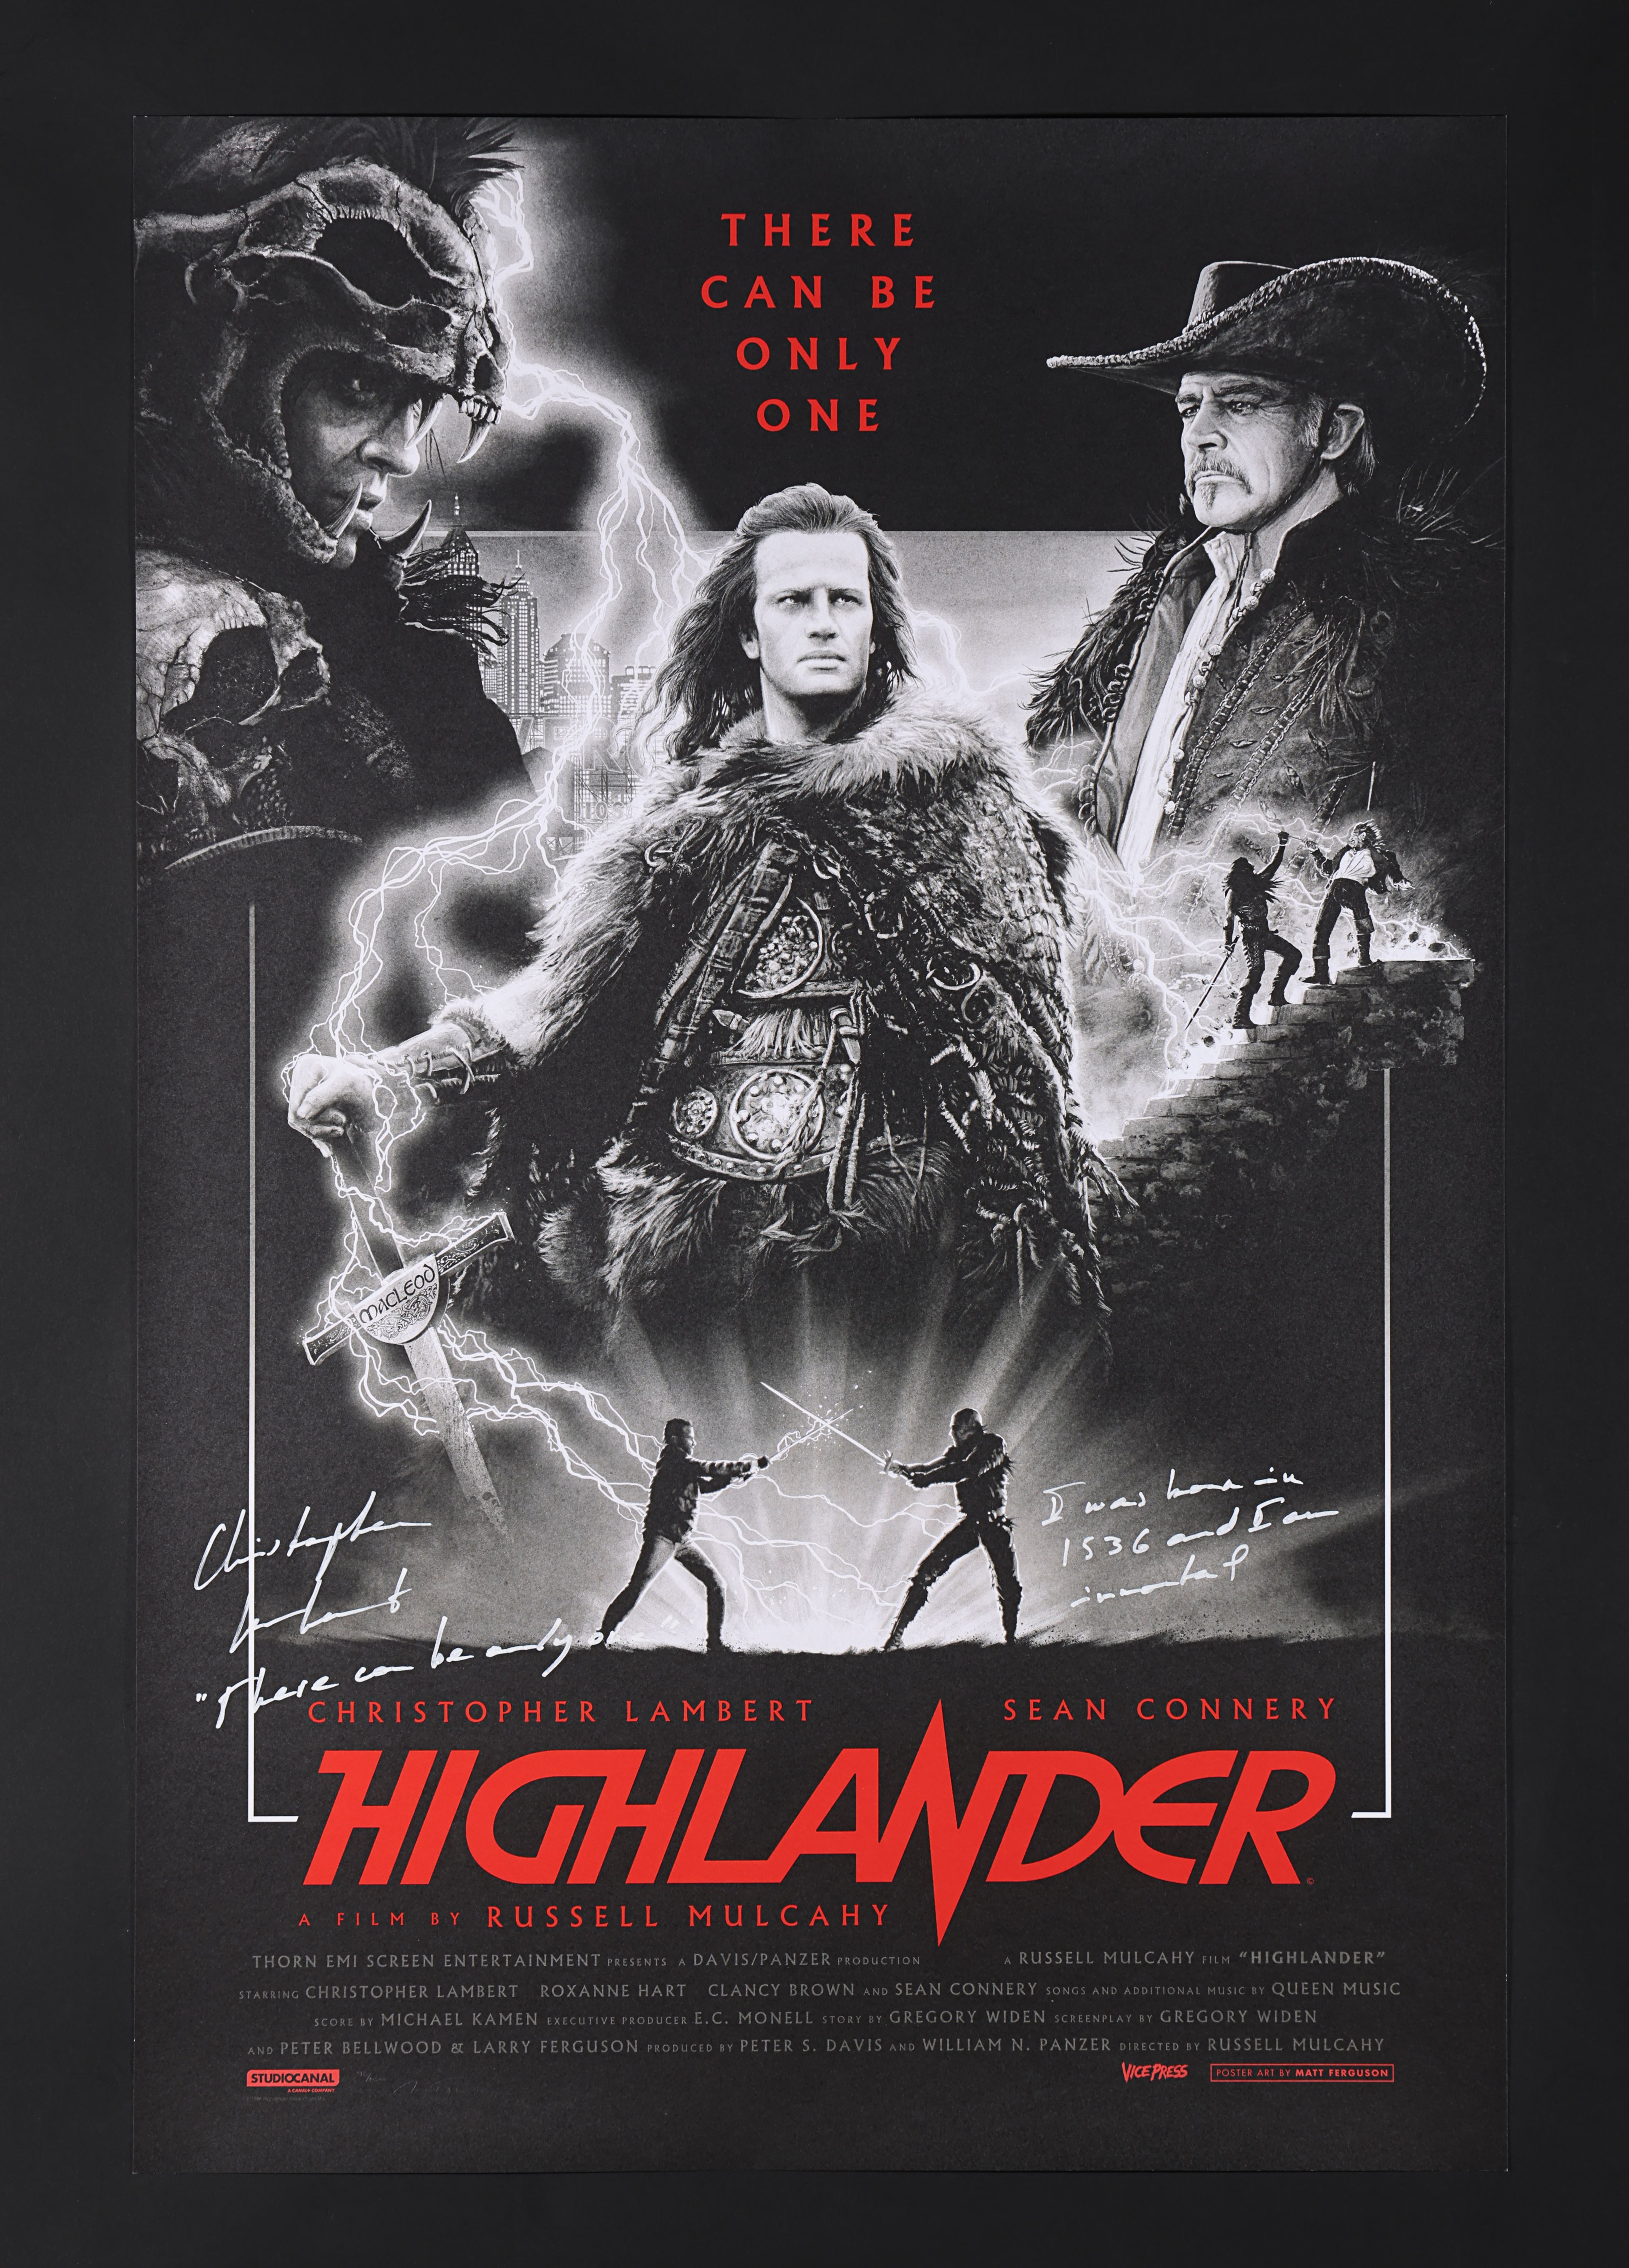 HIGHLANDER (1986) - Christopher Lambert Autographed Limited Edition Vice Press Print by Matt Ferguso